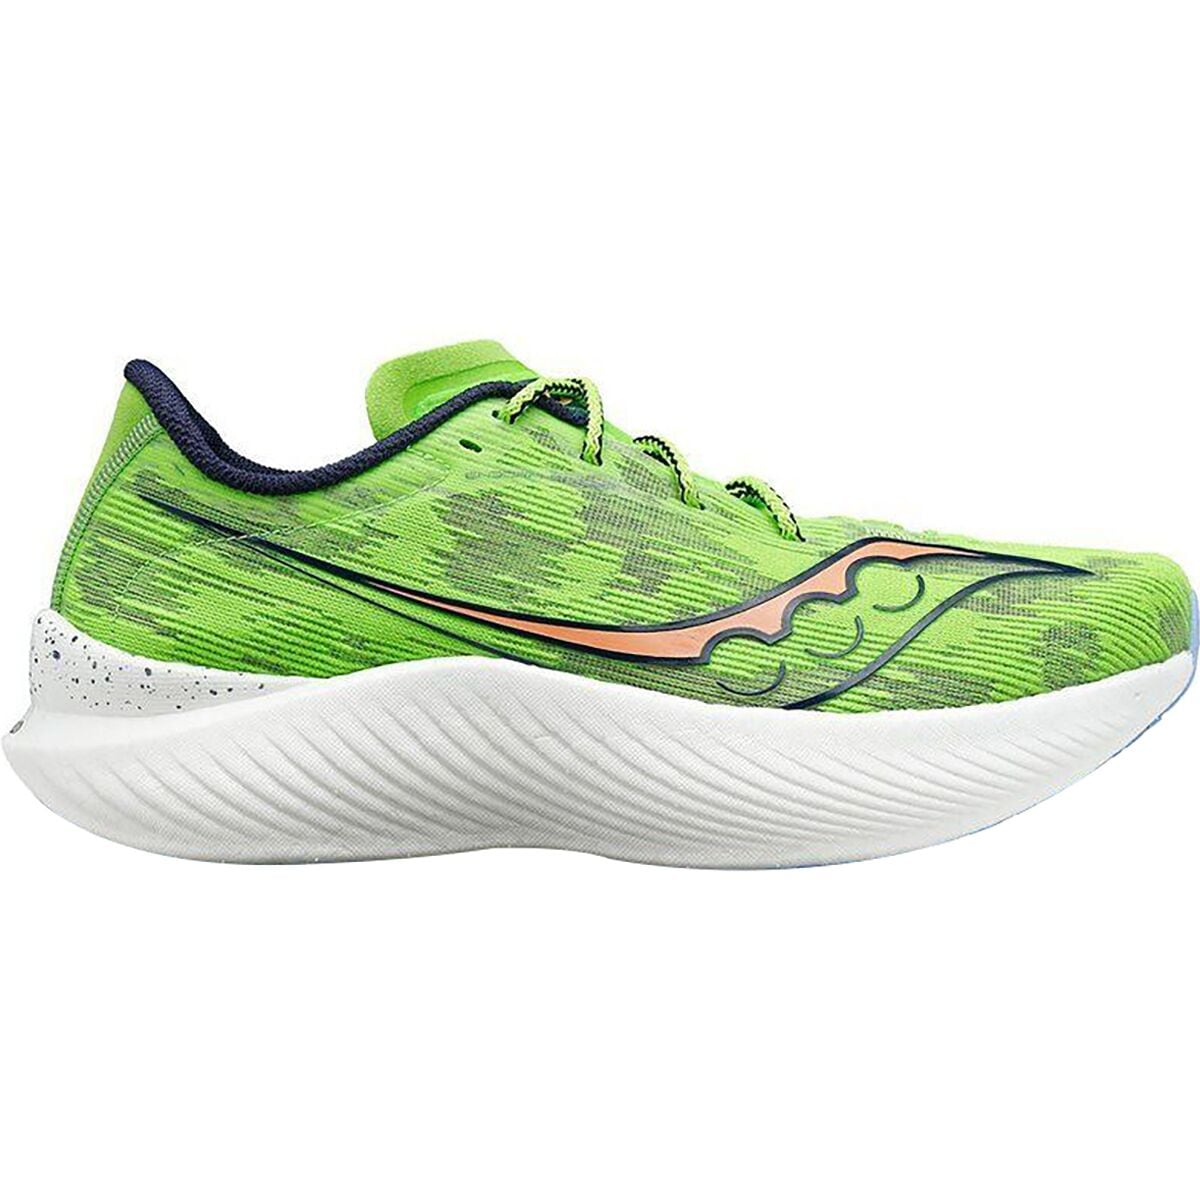 Endorphin Pro 3 Running Shoe - Women